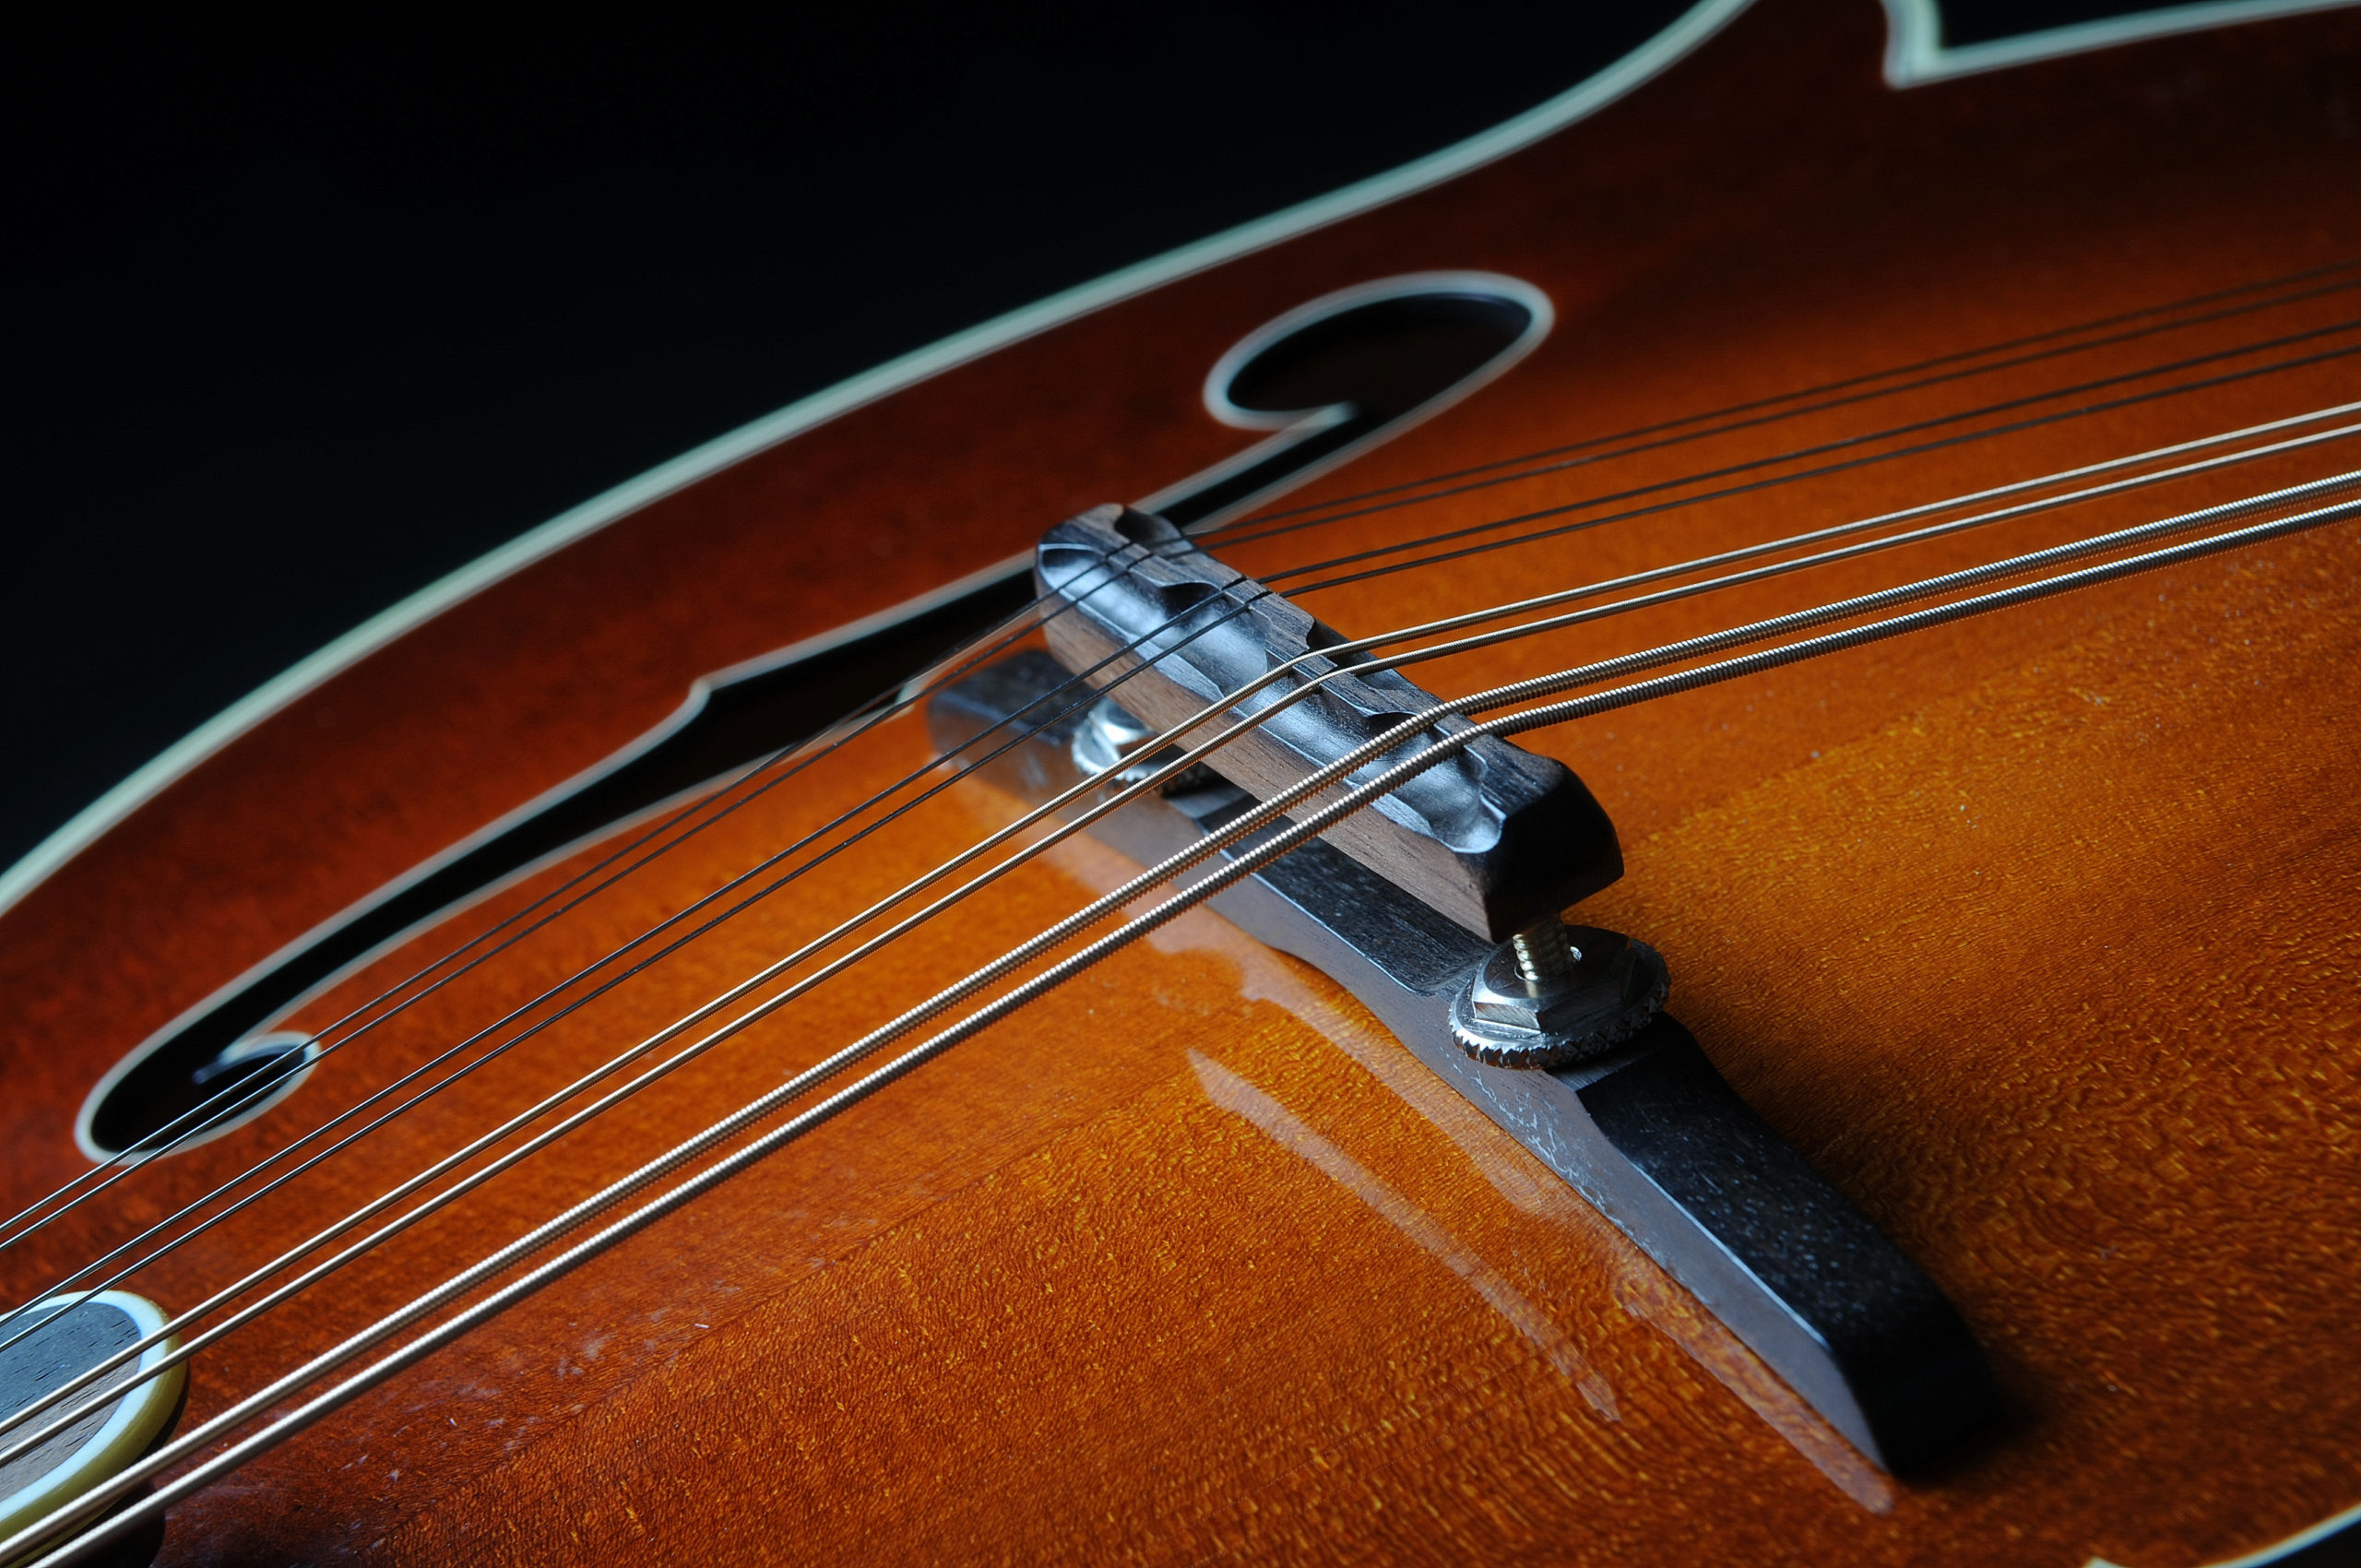 Greenten 4.49 Adjustable Compensated Mandolin Strings Bridge Ebony for Archtop Mandolins 